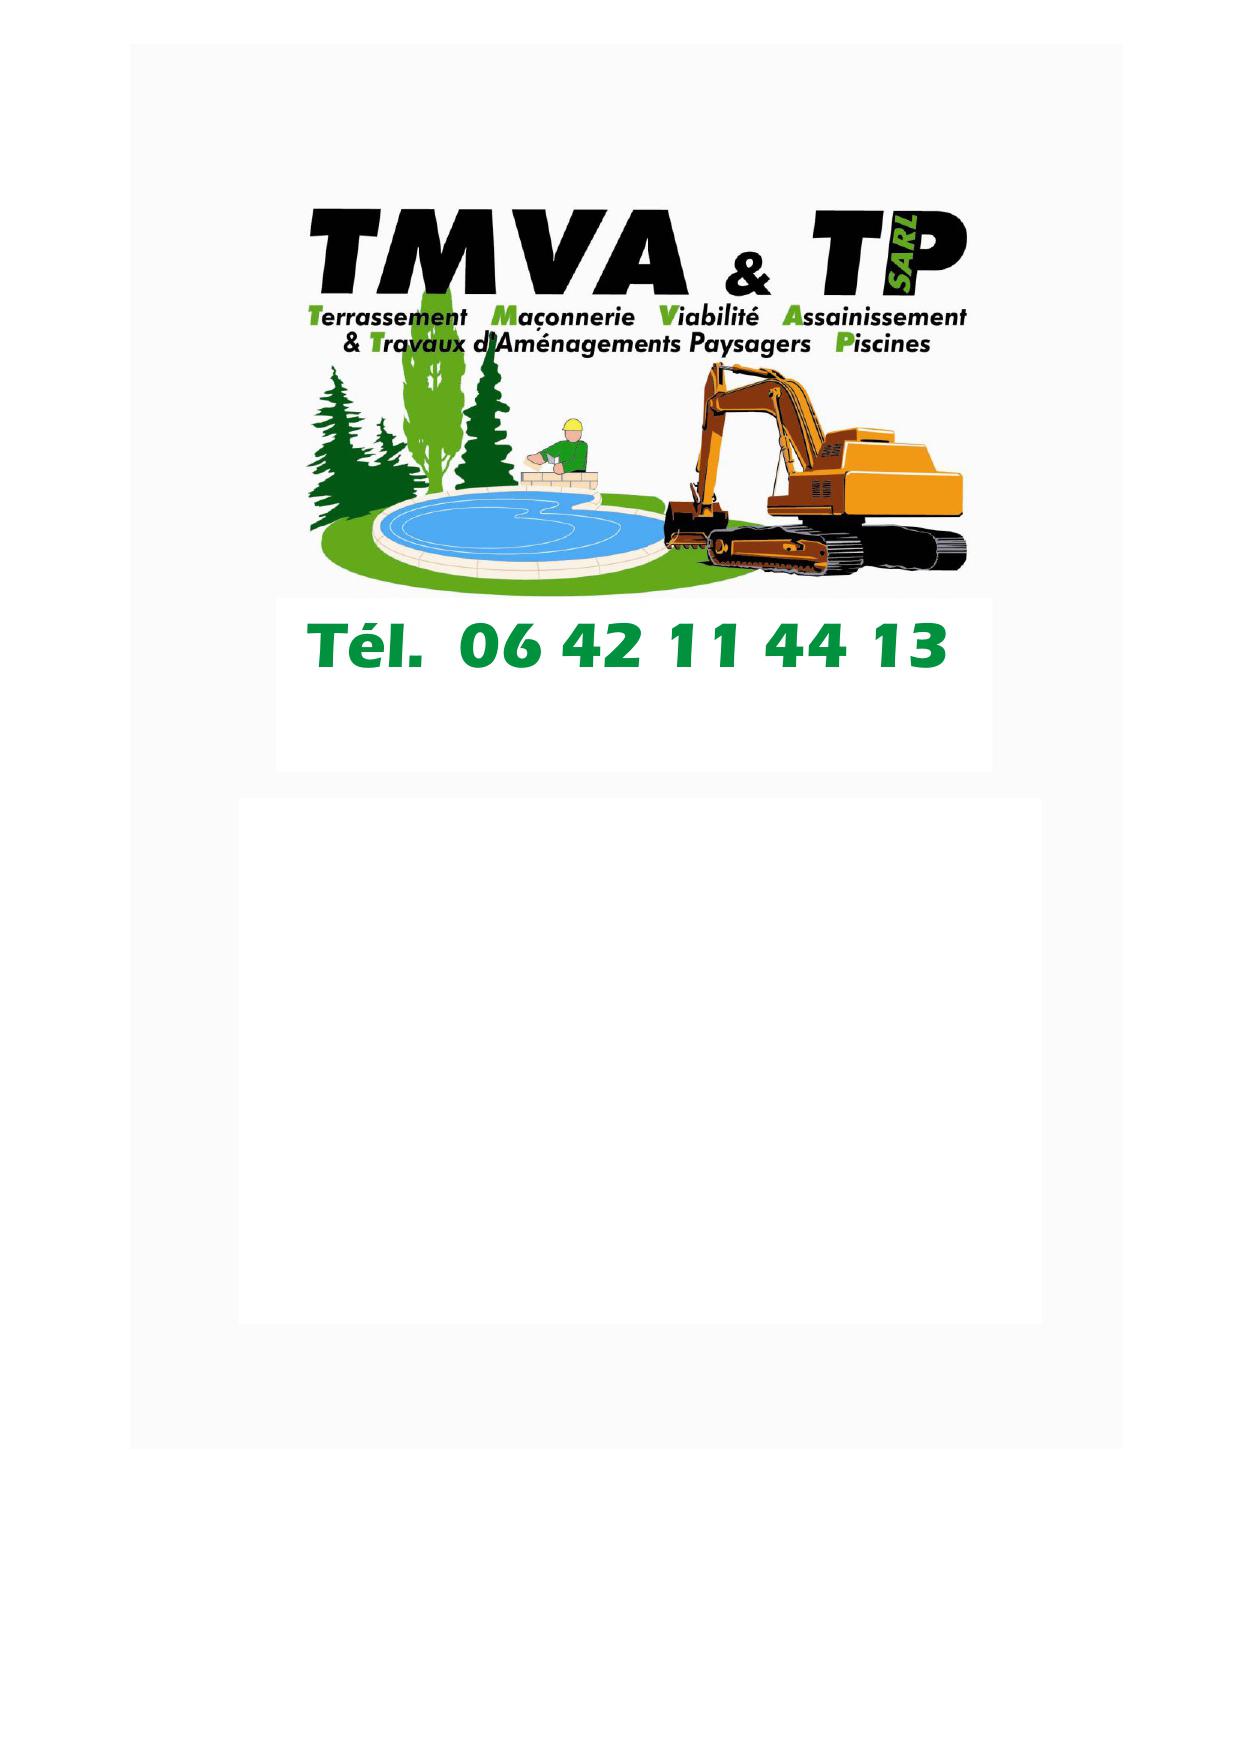 TMVA&TP Logo